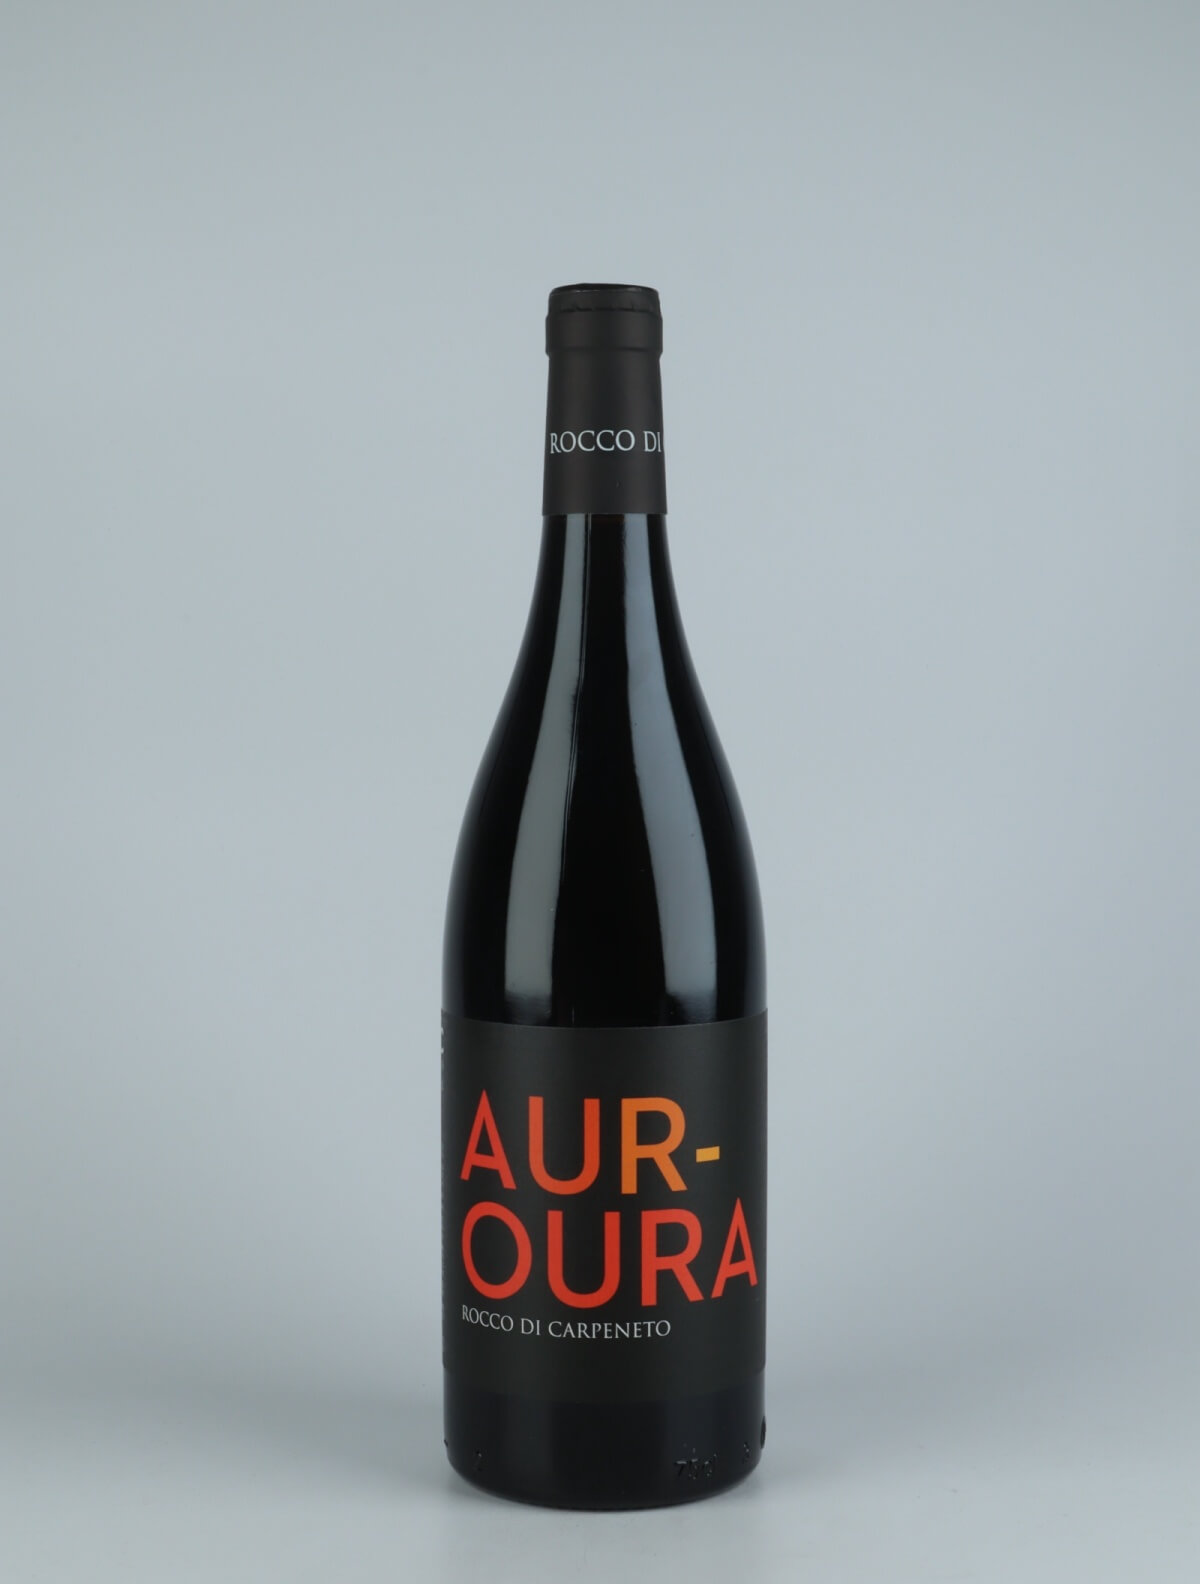 En flaske 2019 Aur-Oura Rødvin fra Rocco di Carpeneto, Piemonte i Italien